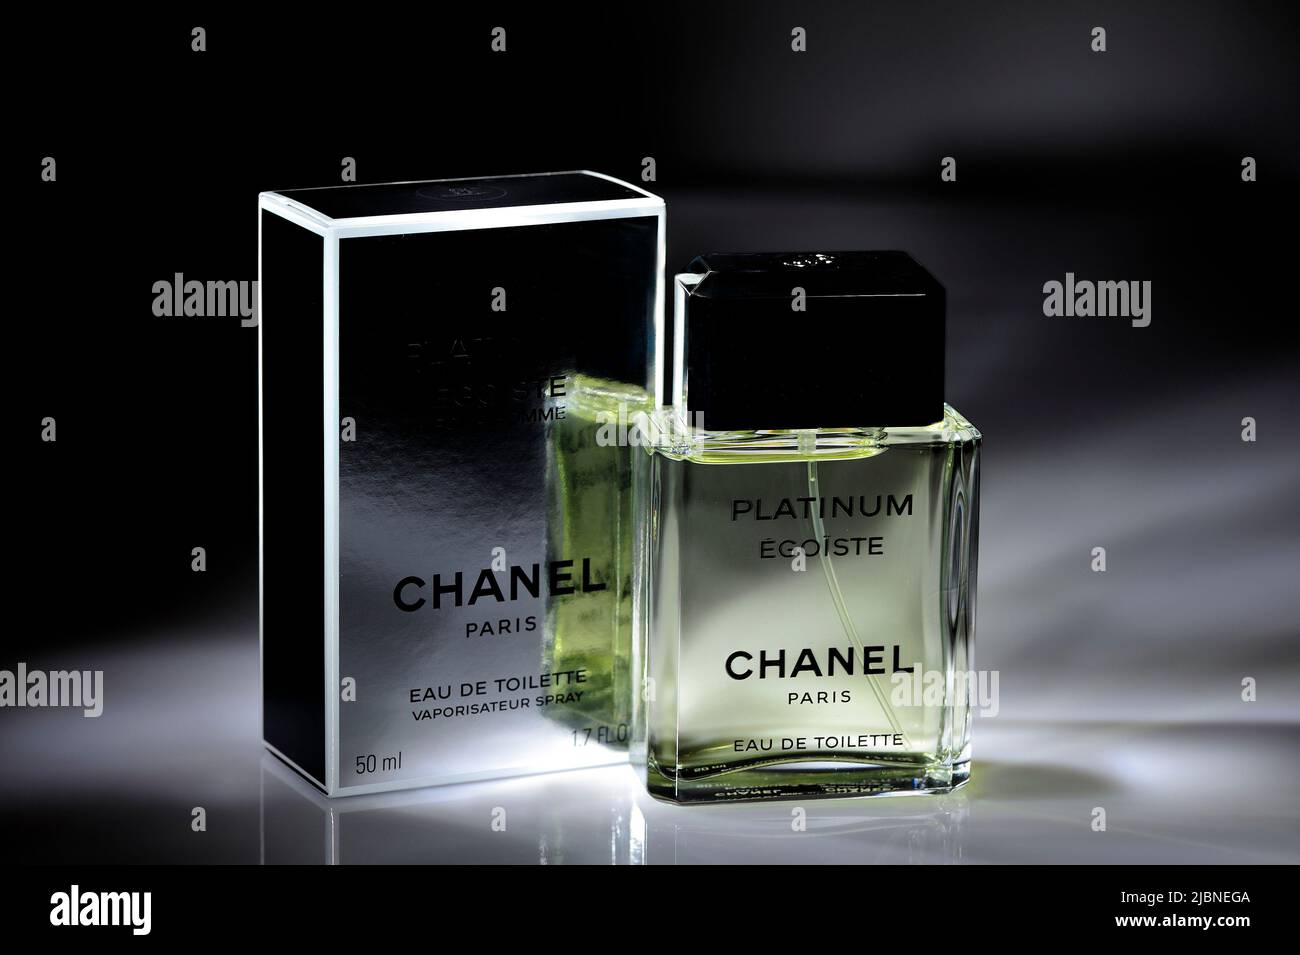 Chanel, platinum, Egoiste, box, business, sale, black friday,perfum,  bottle, fragrance, spirit, odour, product, perfume, mens perfume bottle,  parfum Stock Photo - Alamy